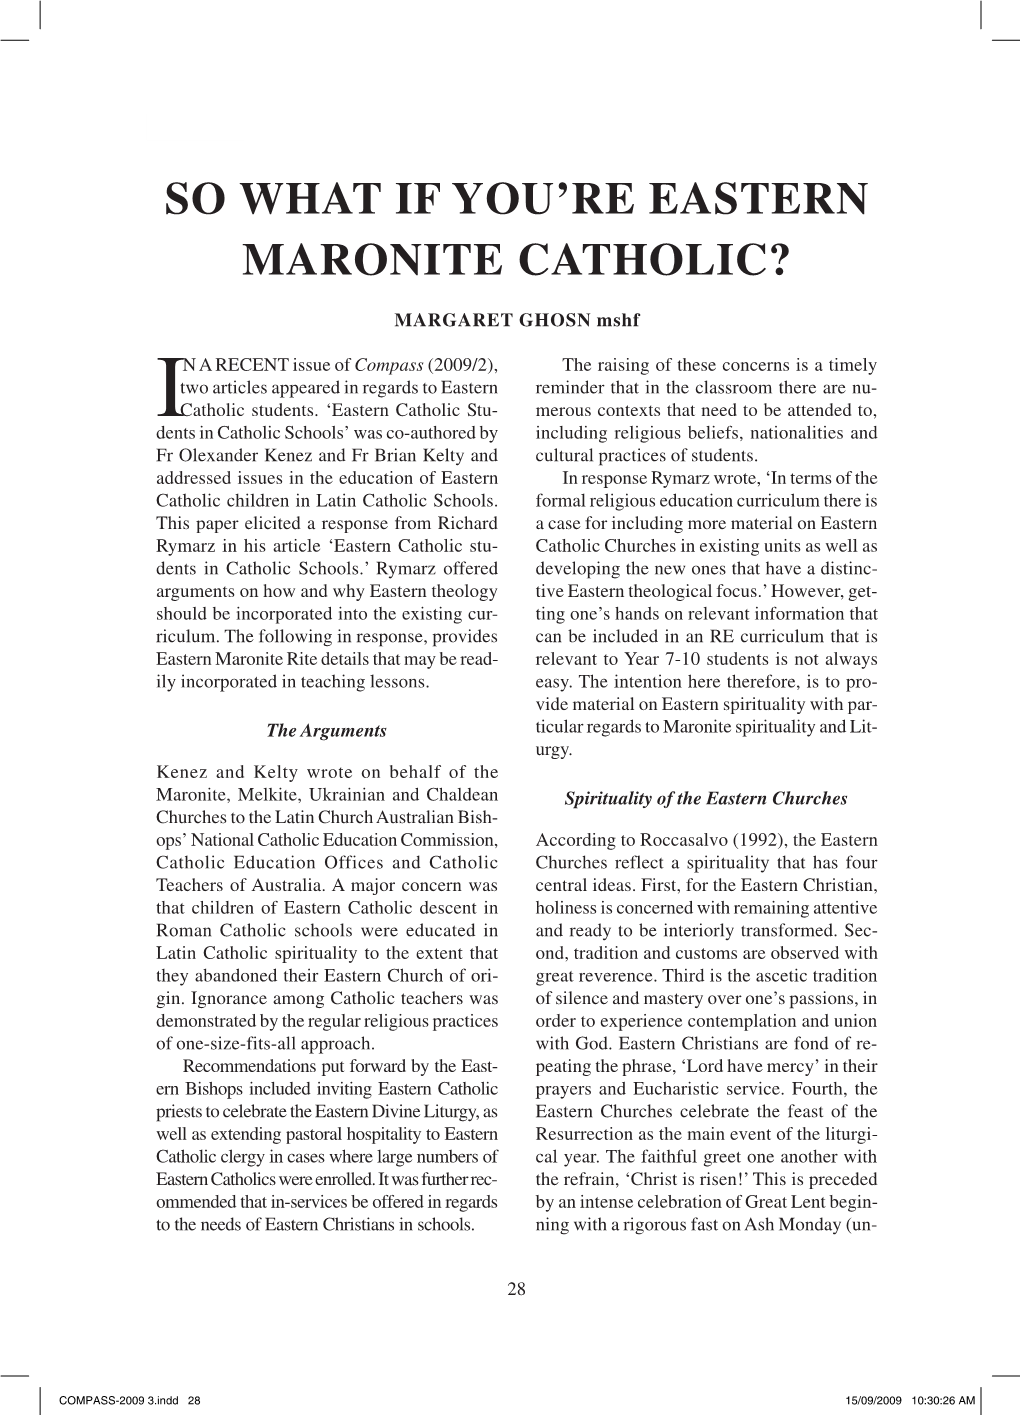 So What If You're Eastern Maronite Catholic?